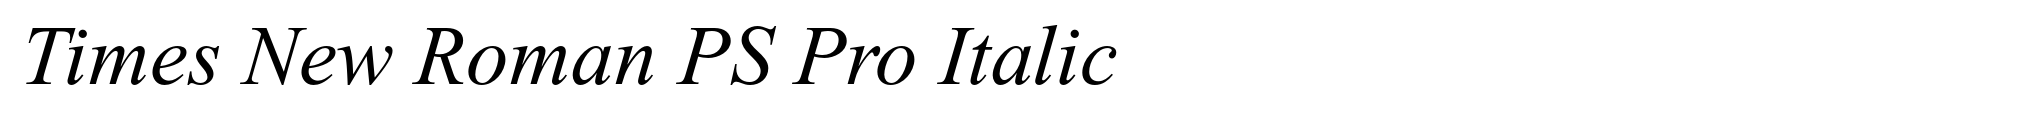 Times New Roman PS Pro Italic image